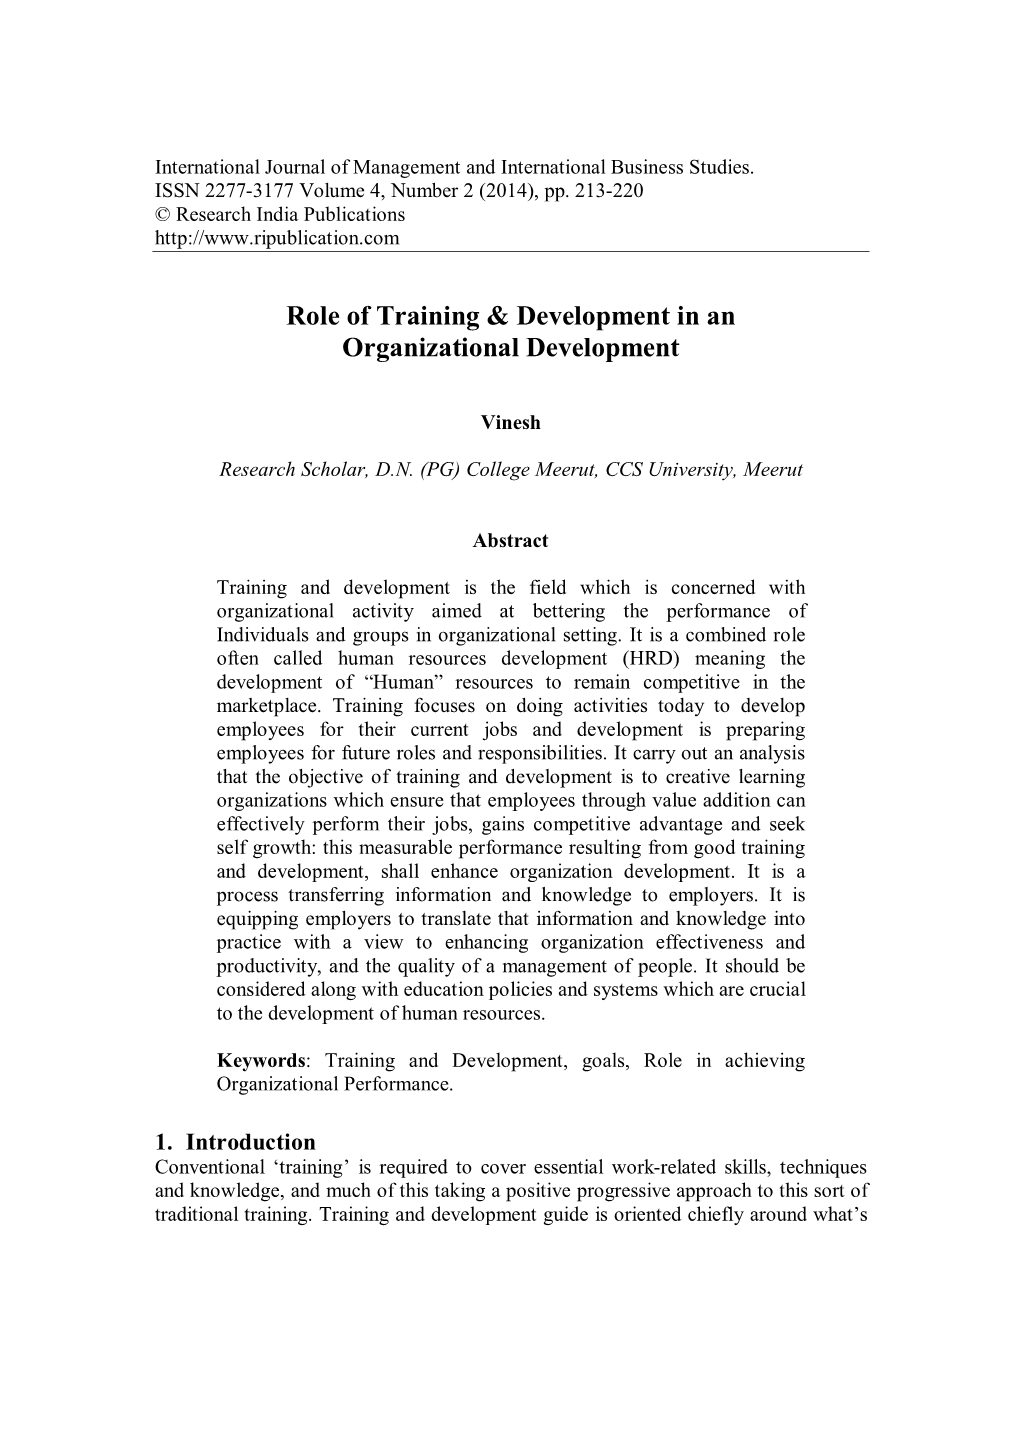 Role of Training & Development in an Organizational Development